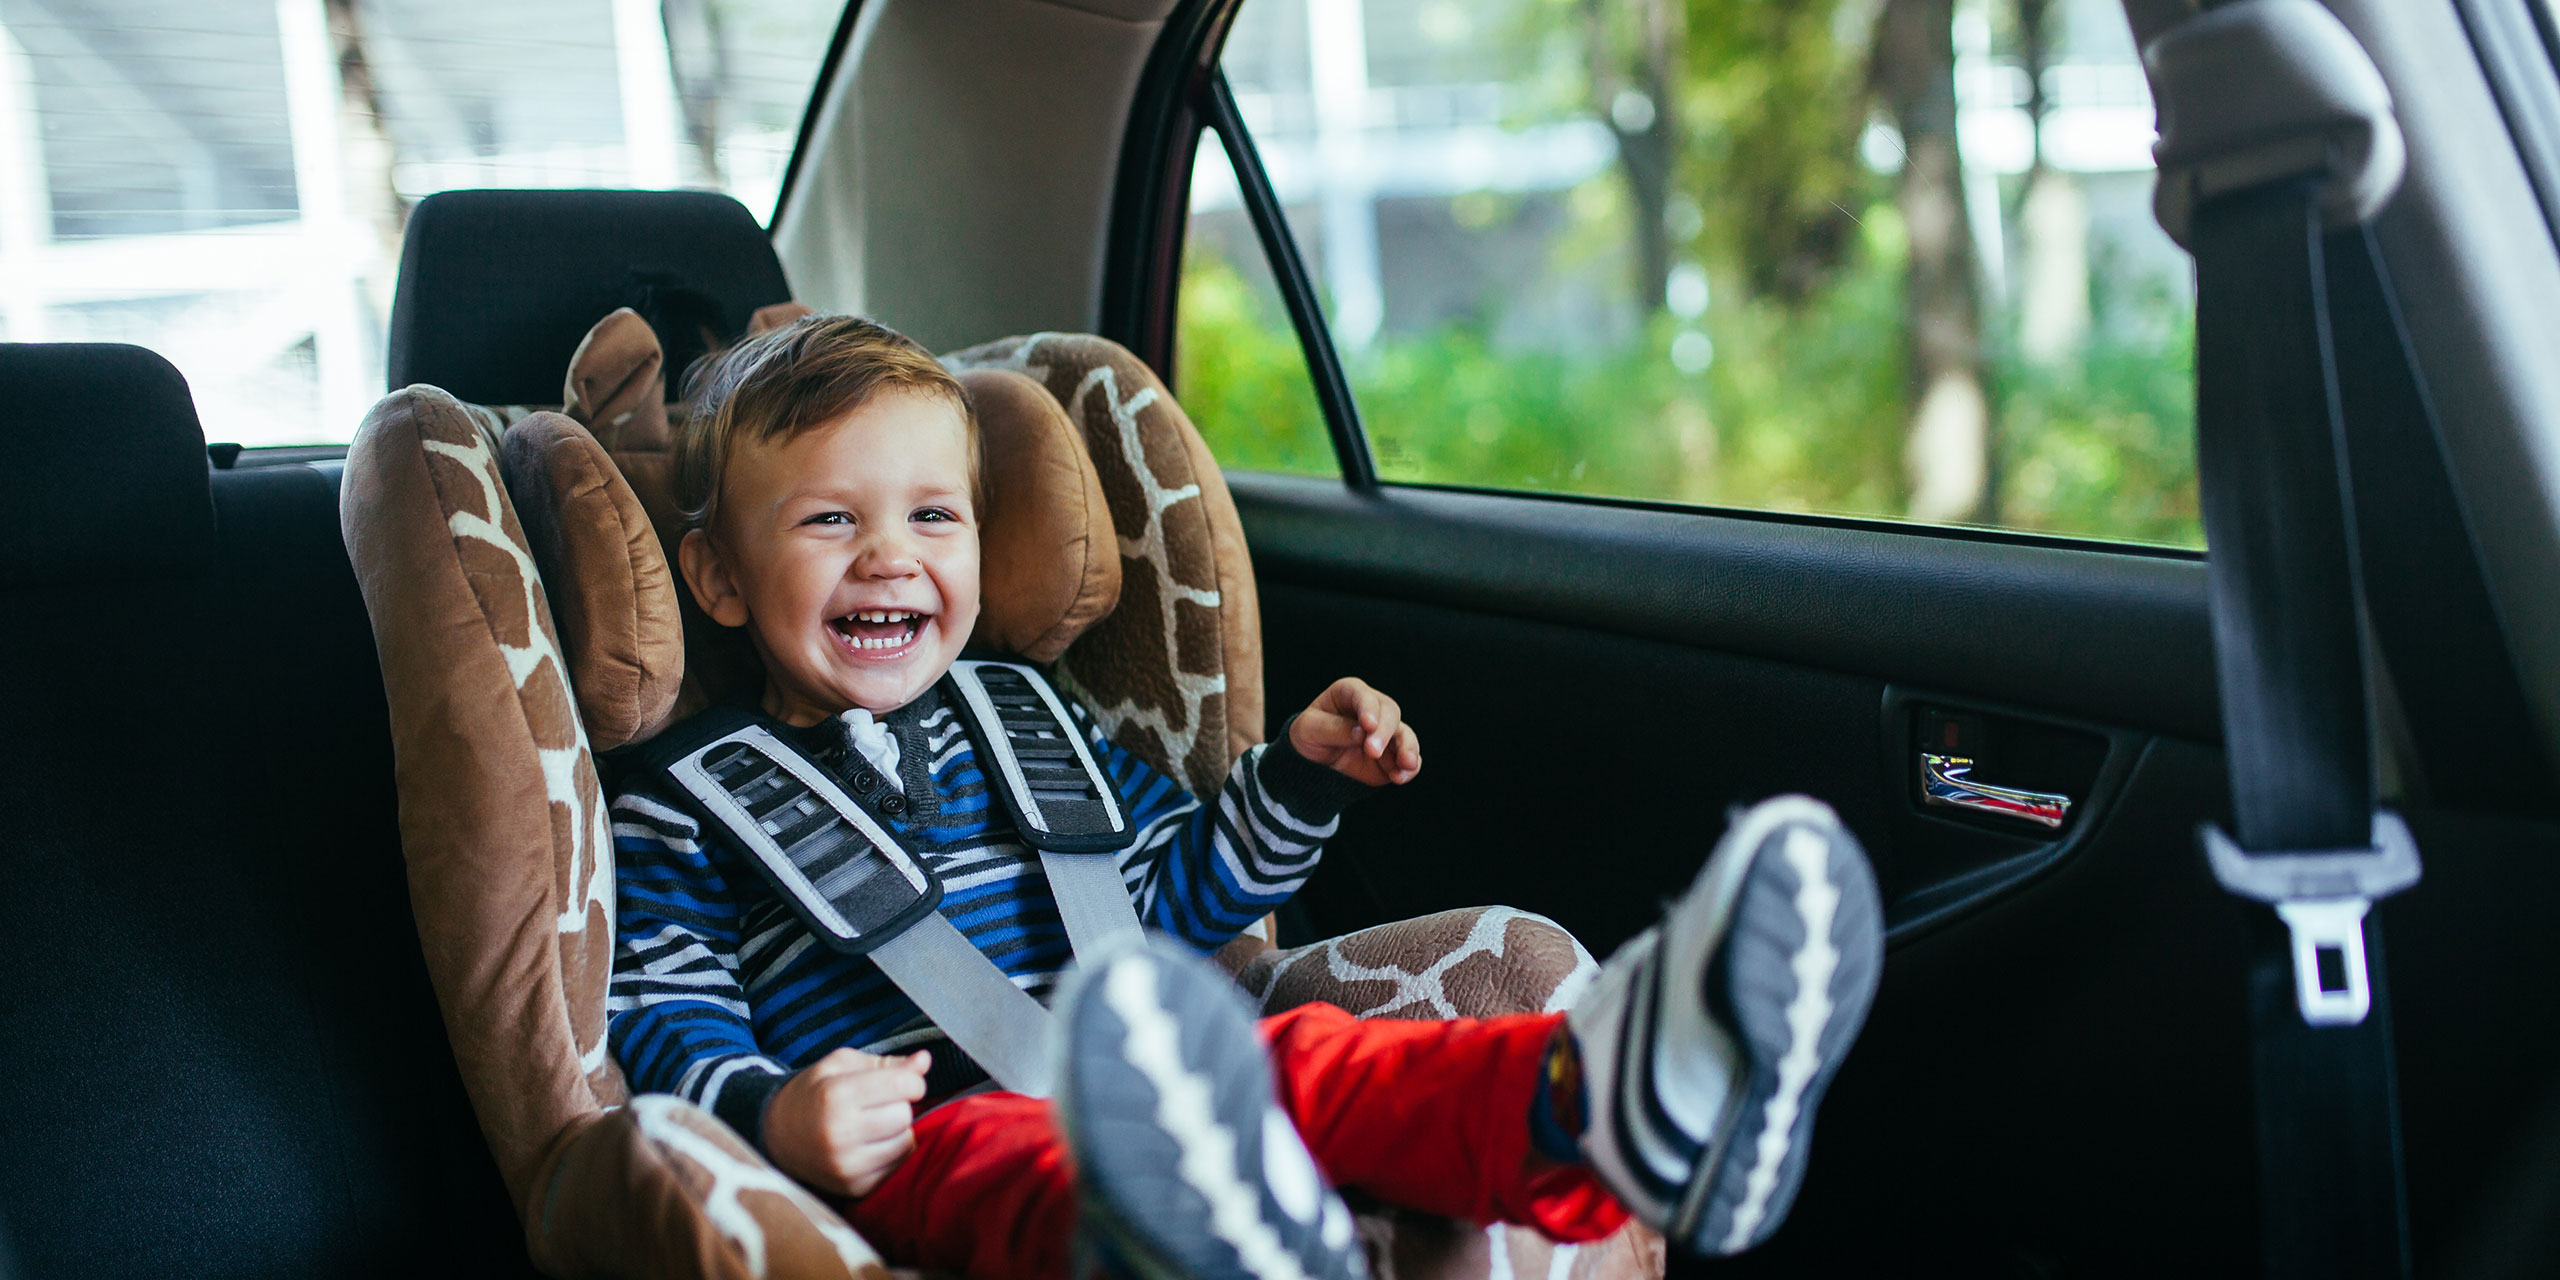 Toddler in Car Seat; Courtesy of David Tadevosian/Shutterstock.com